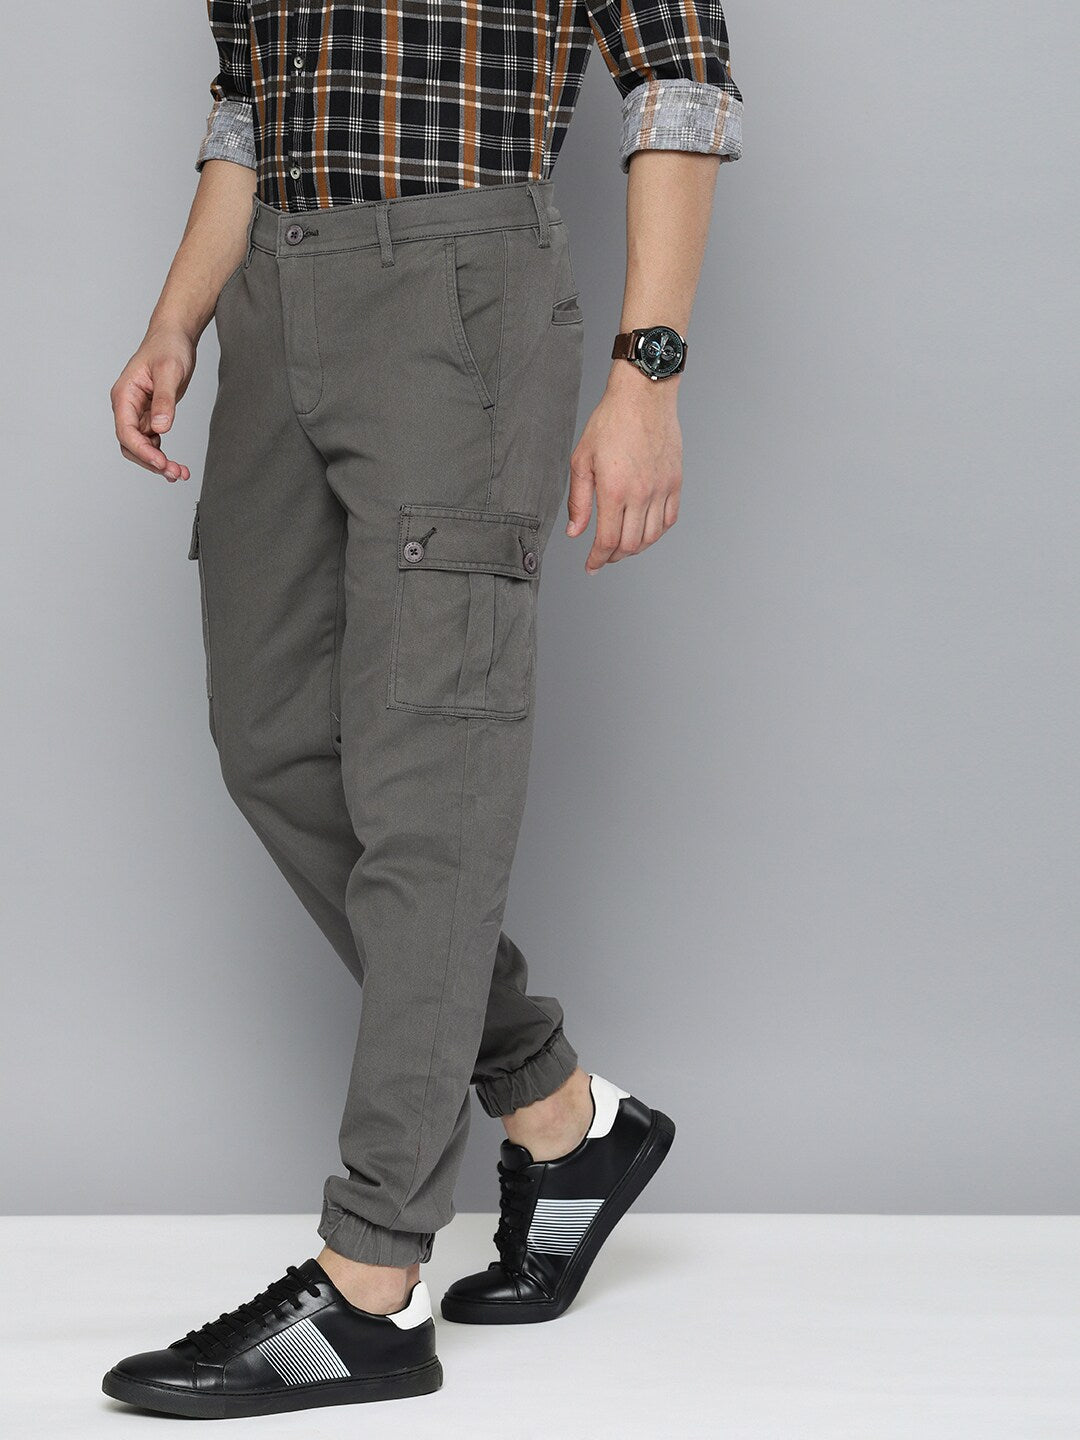 HAPIMO Men's Cotton Cargo Jogger Cuff Pants Summer Discount Casual Workout  Sports Zipper Button Comfy Trousers for Boys Fashion Solid Sale Black S -  Walmart.com